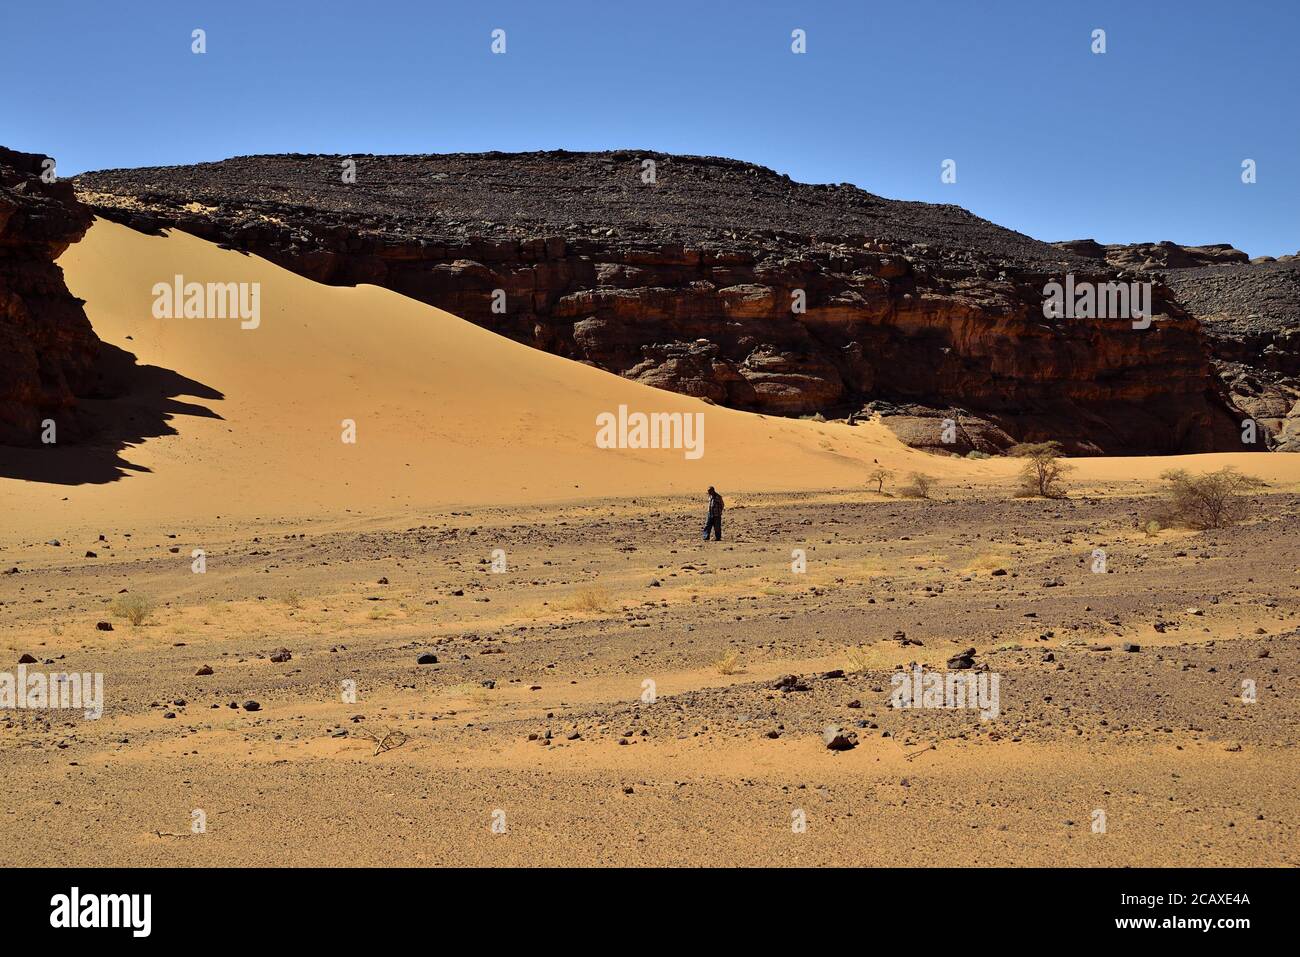 SAHARA SAND DUNES, ROCK FORMATIONS, DESERT PLANTS AND SHRUBS IN ALGERIA. TRAVEL AND ADVENTURE IN ALGERIA. Stock Photo